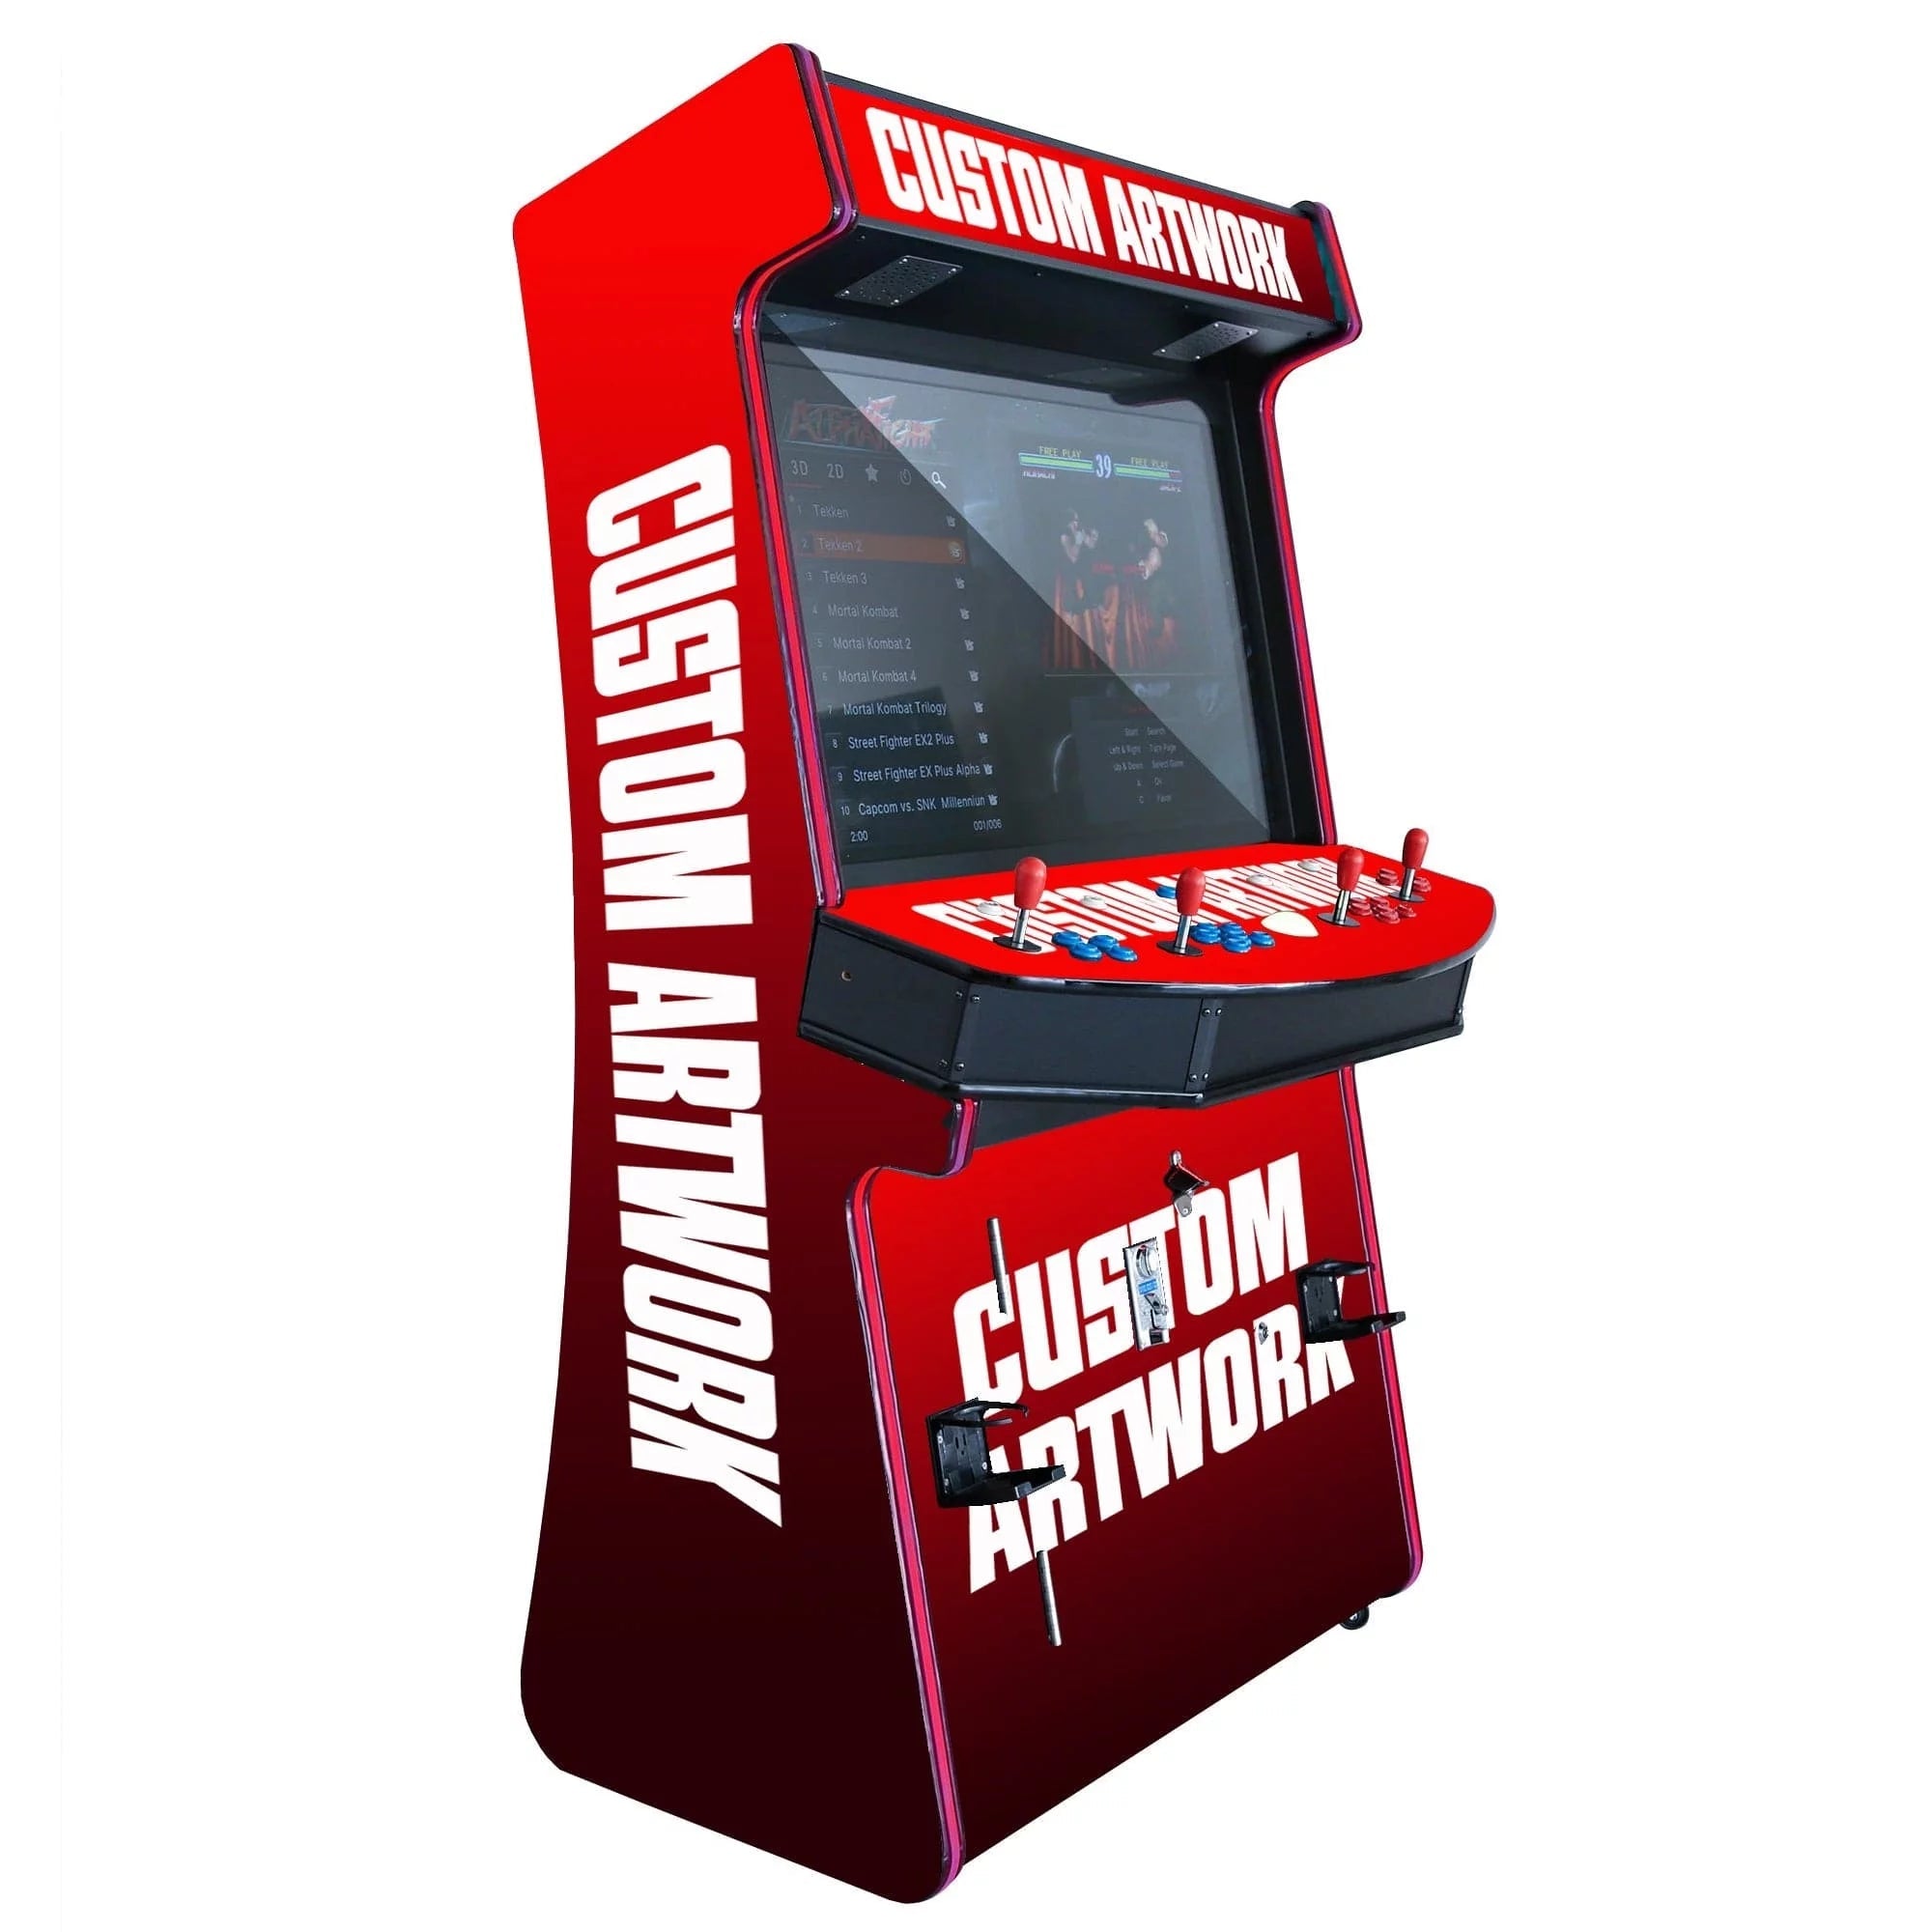 Mortal Kombat Arcade Edition MD - Mini-Revver